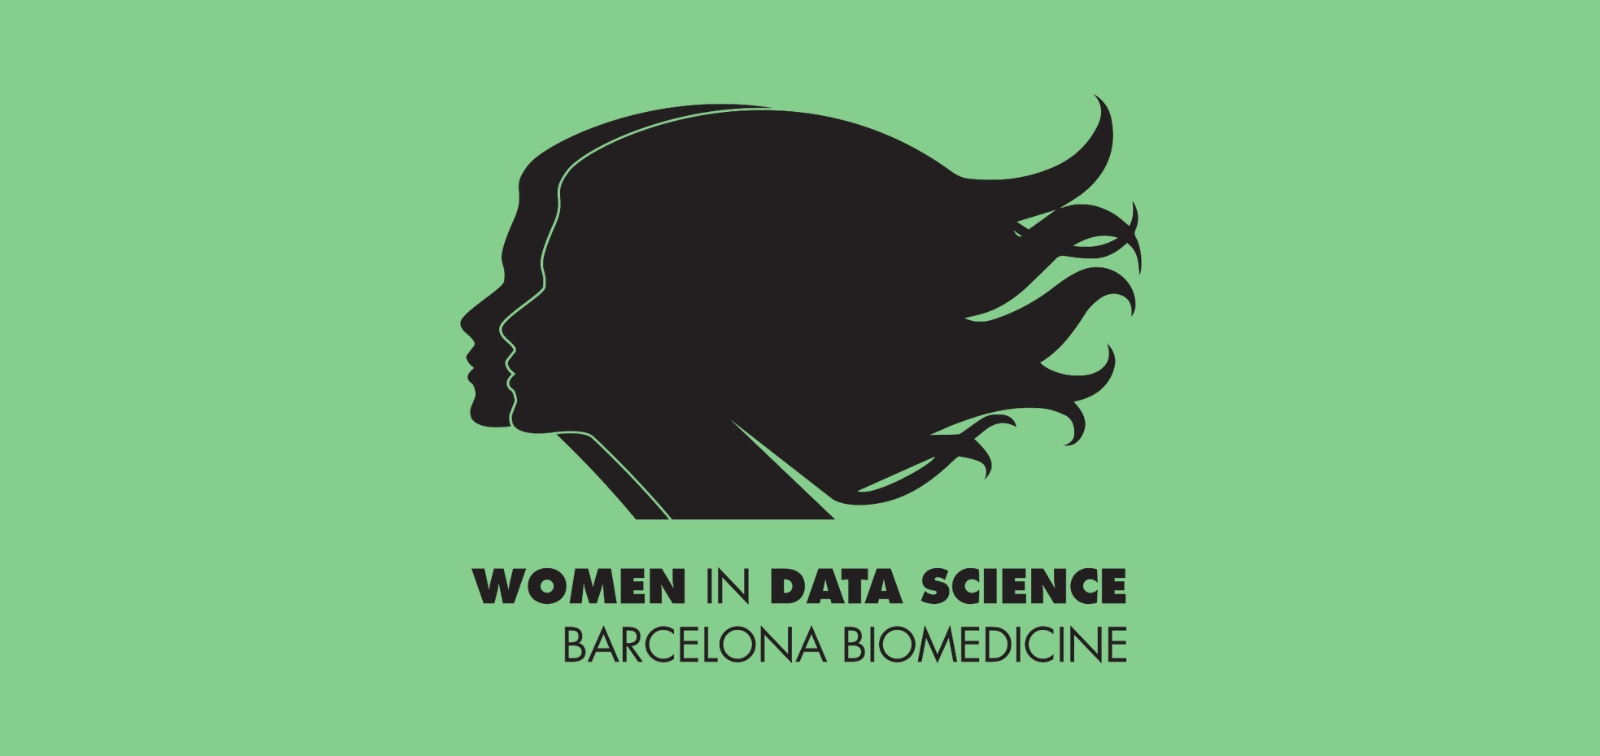 Women in Data Science Barcelona Biomedicine.jpg